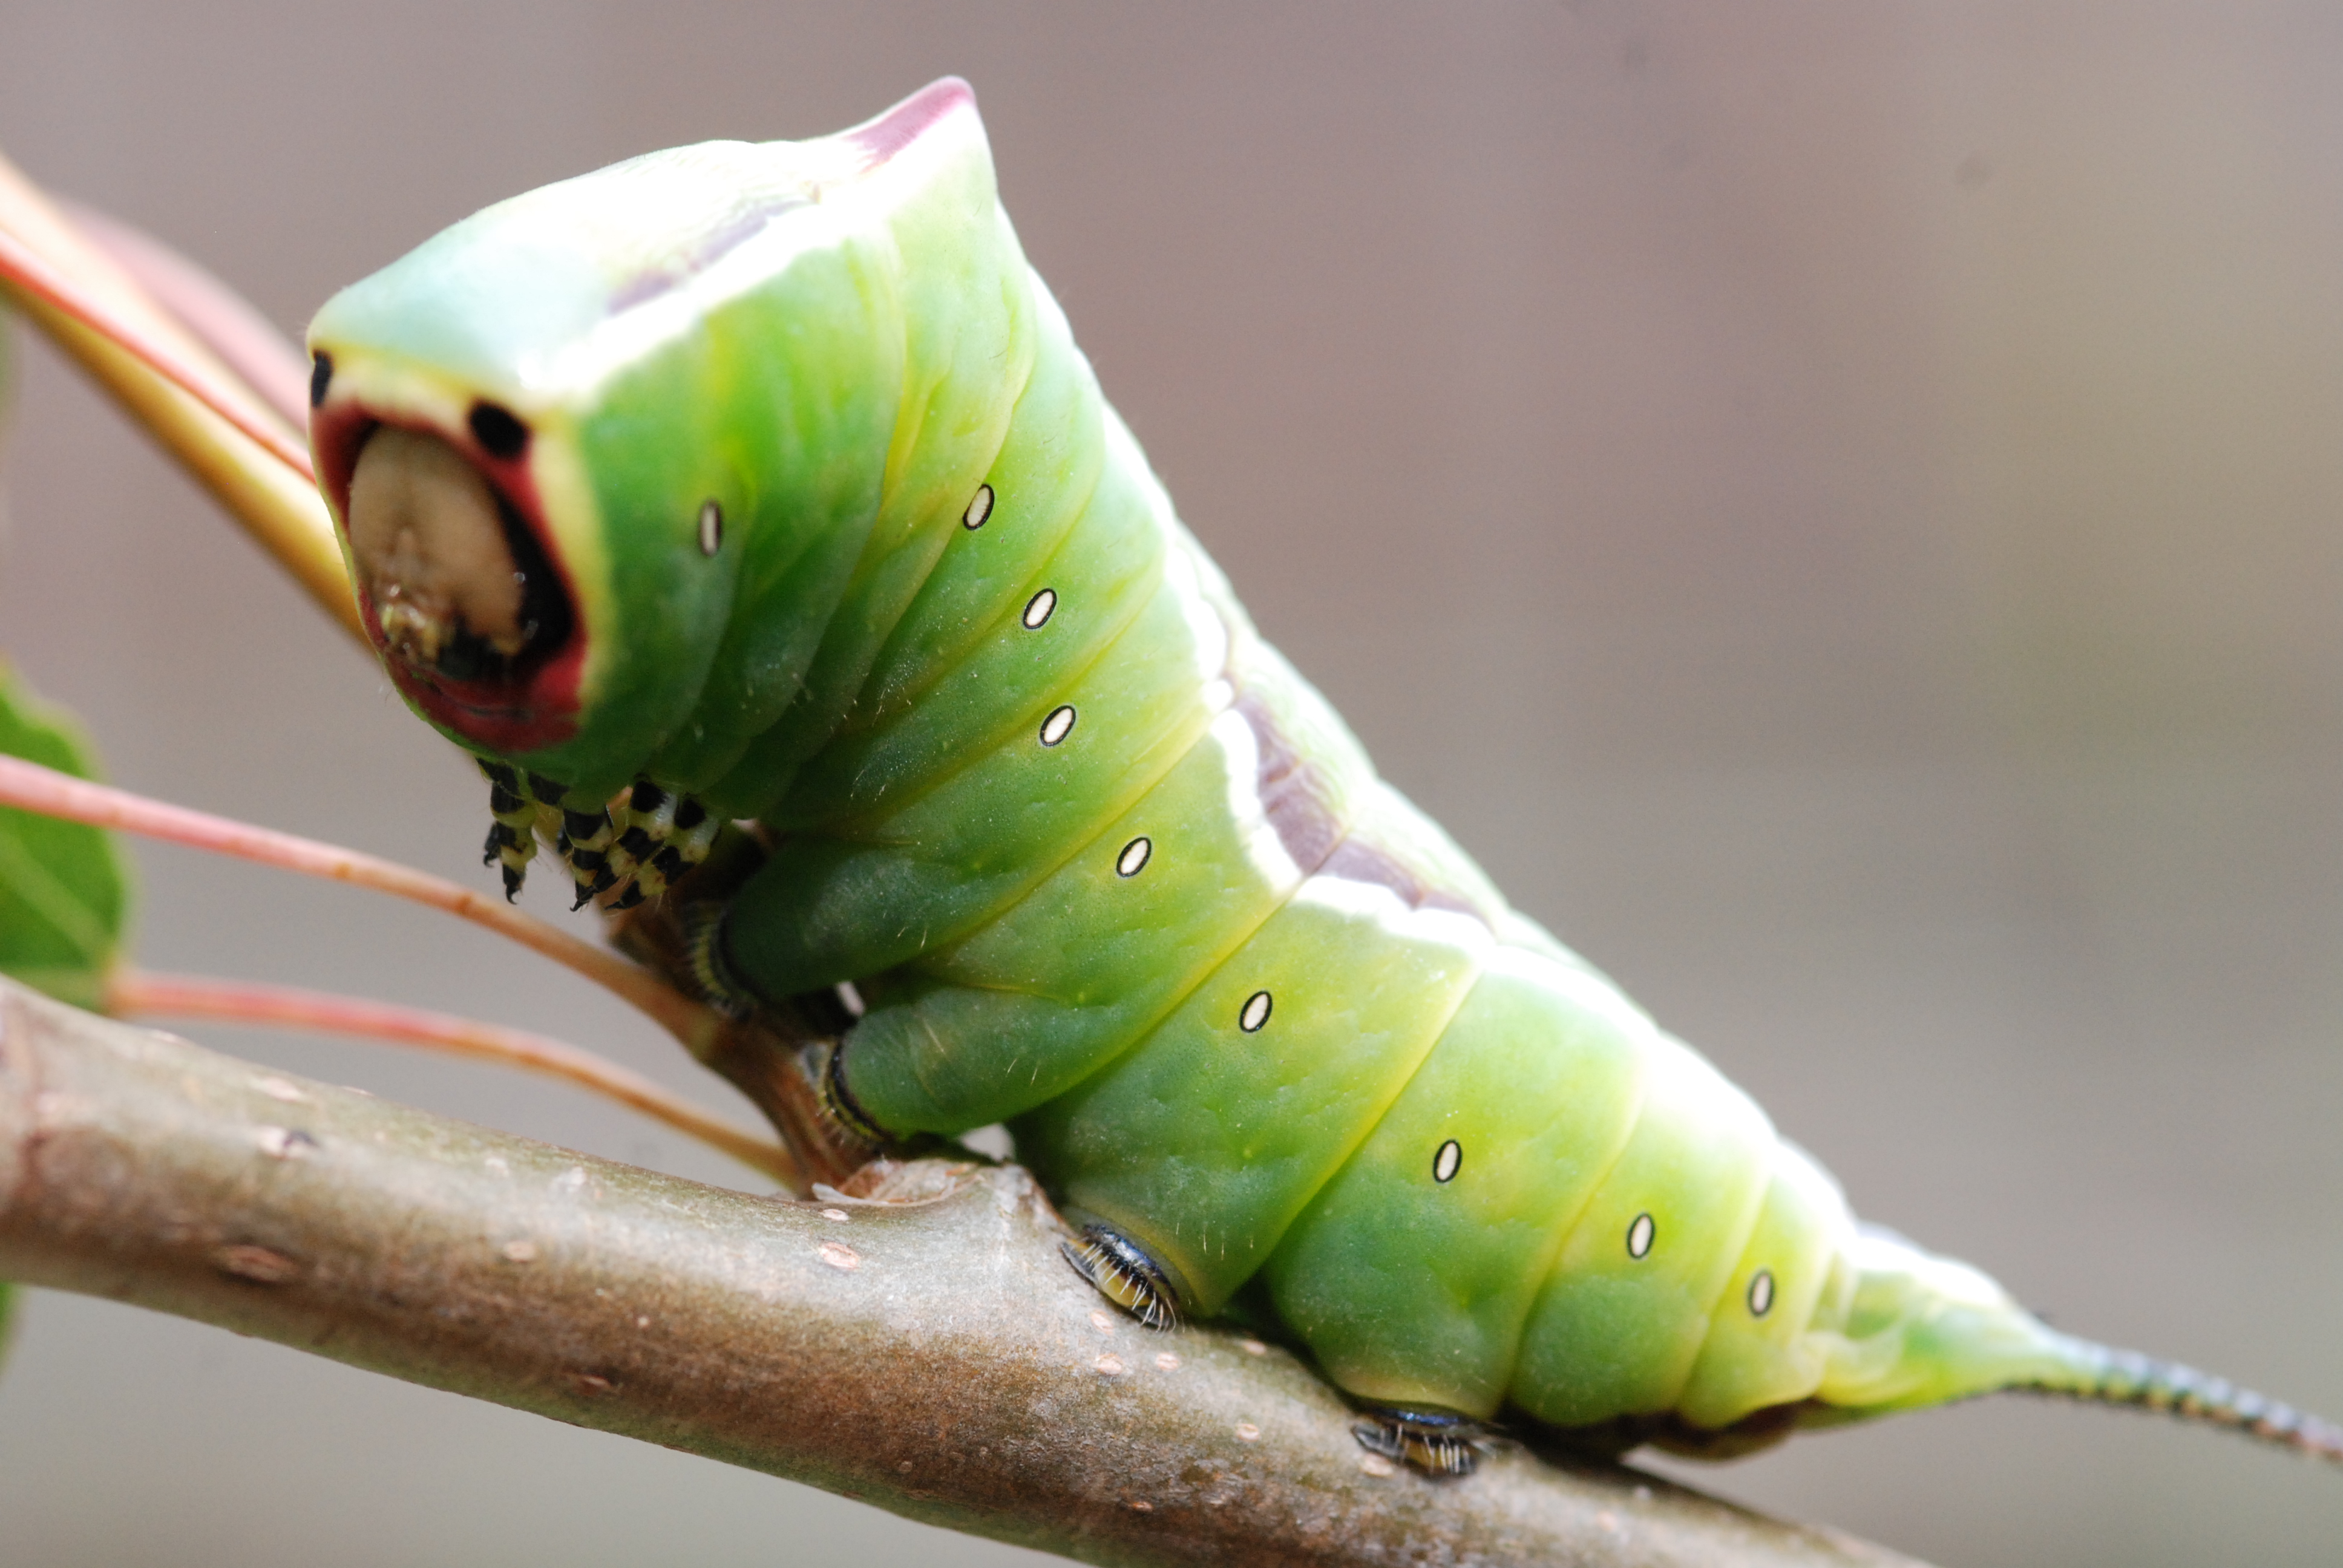 NaturePlus: large green caterpillar idenification please